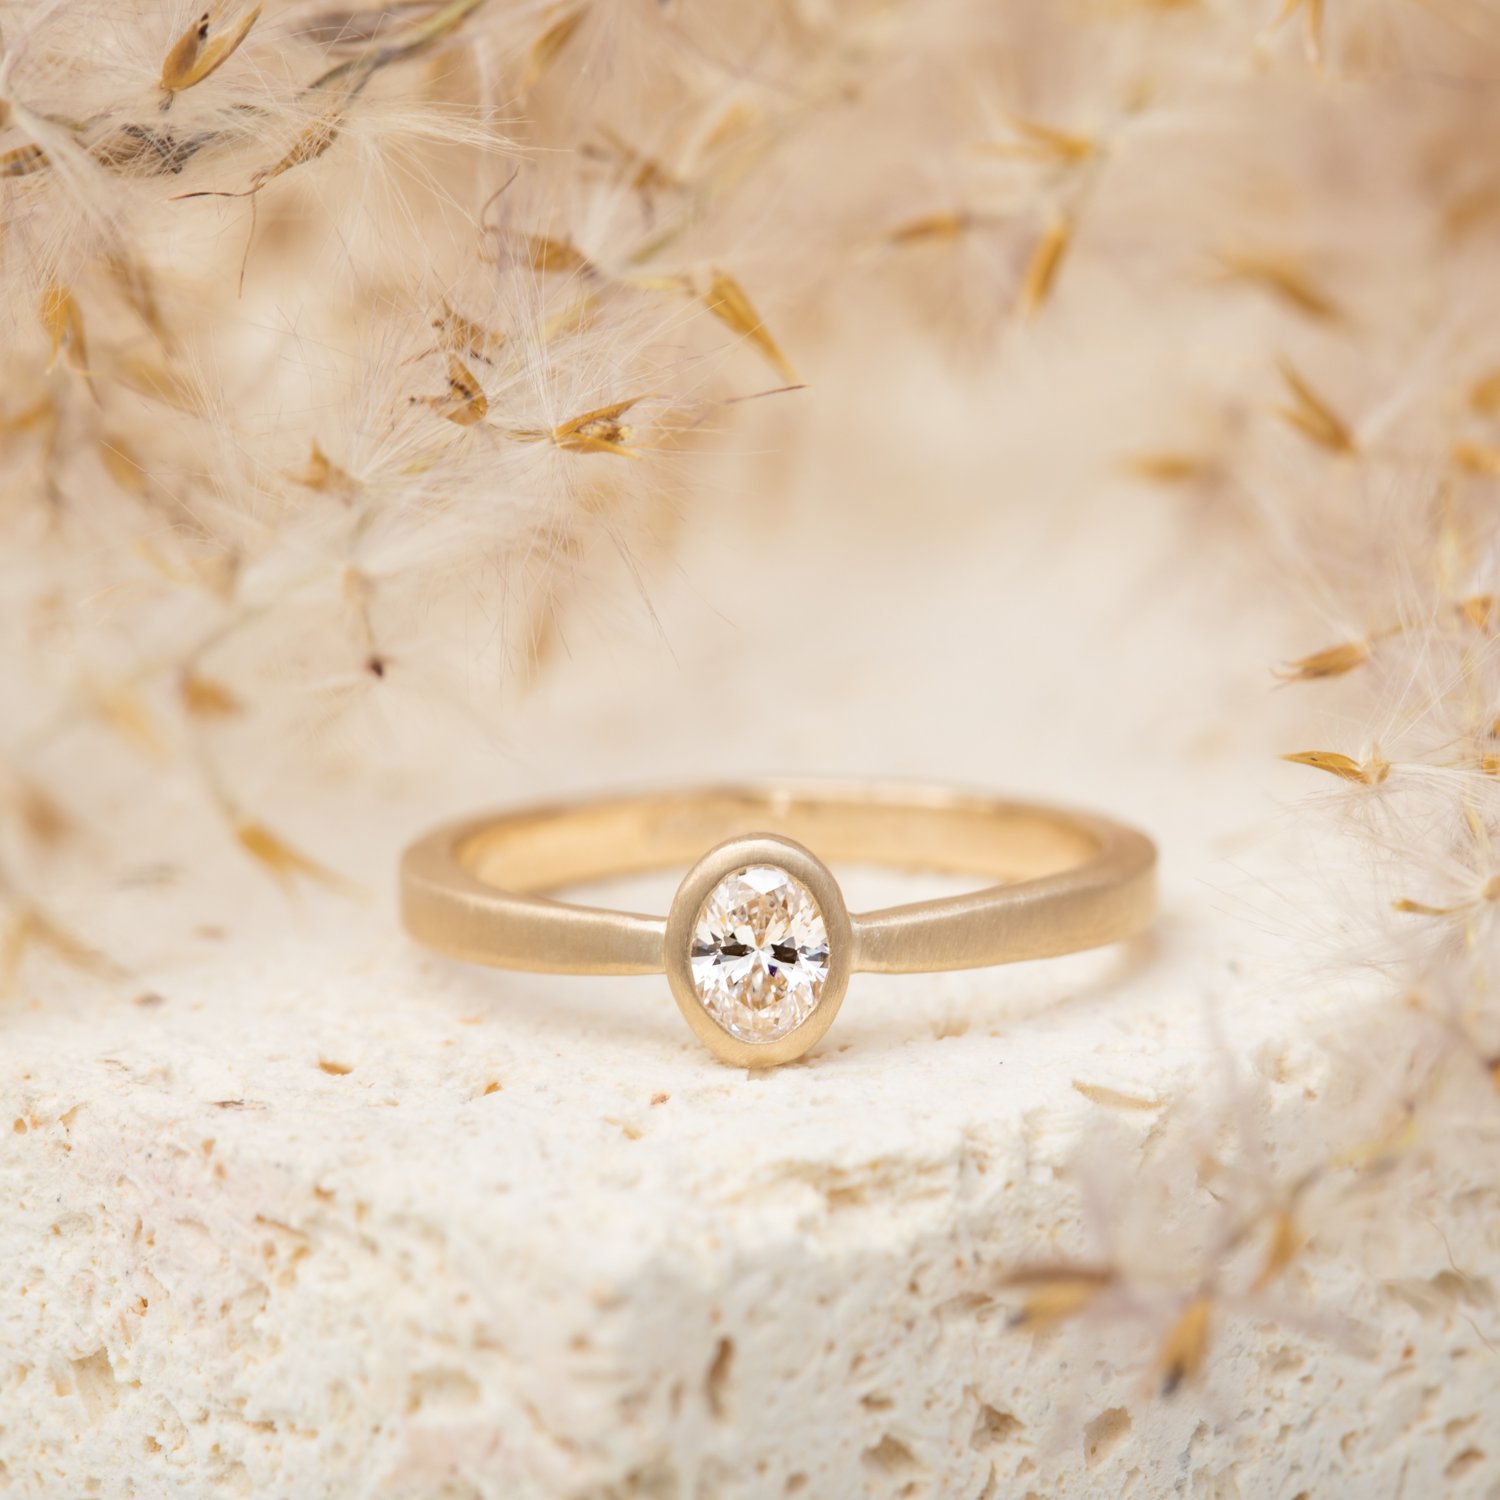 styled-oval-diamond-gold-ring.jpg